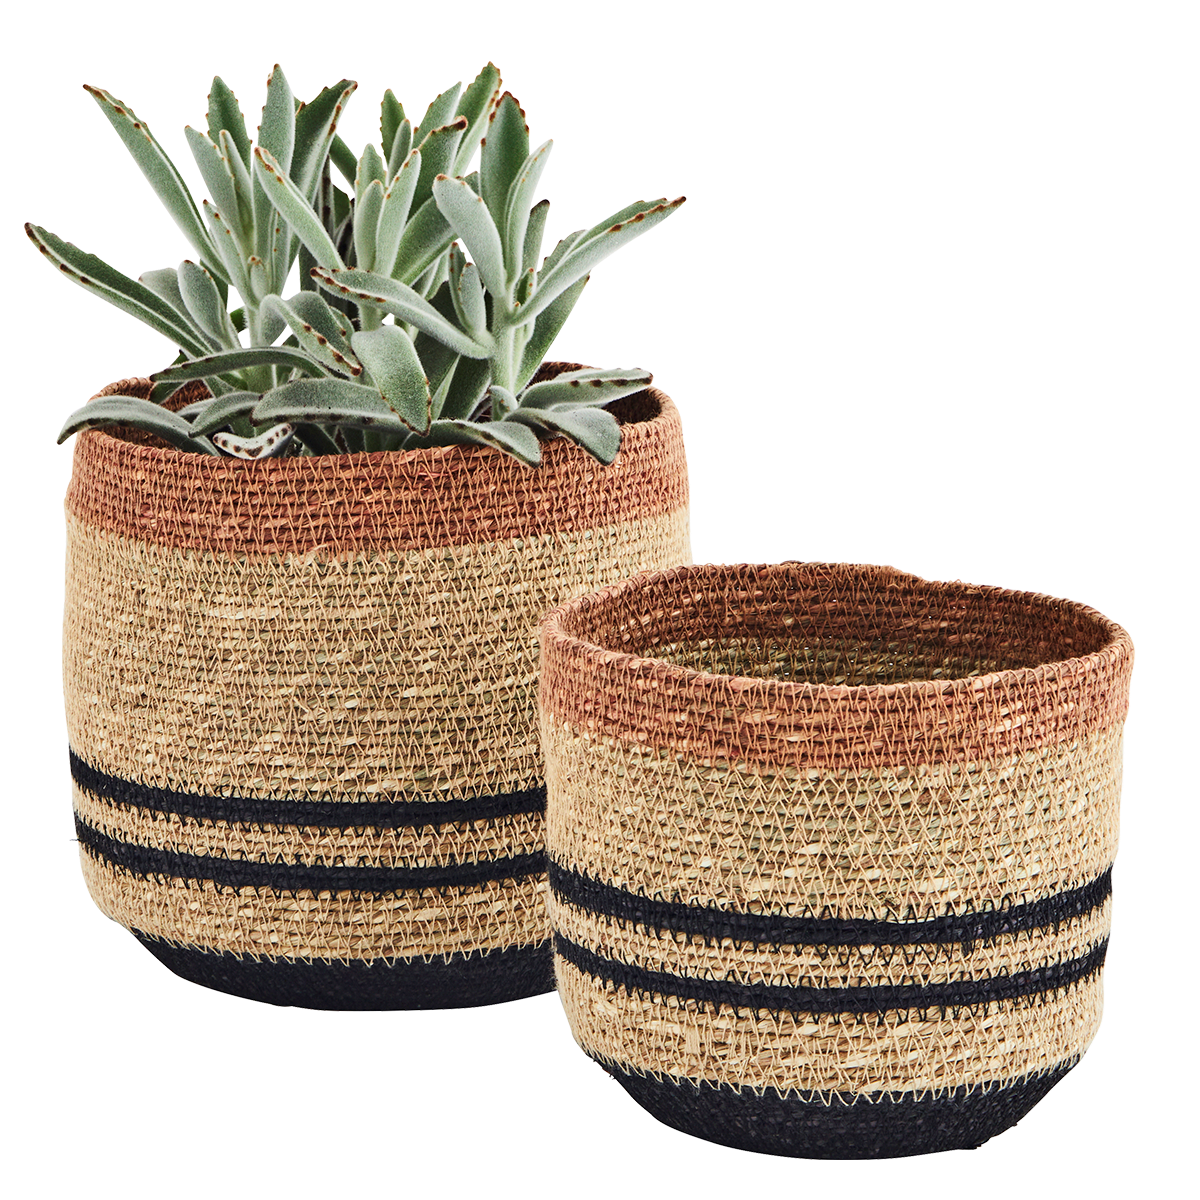 Seagrass baskets w/ stitching